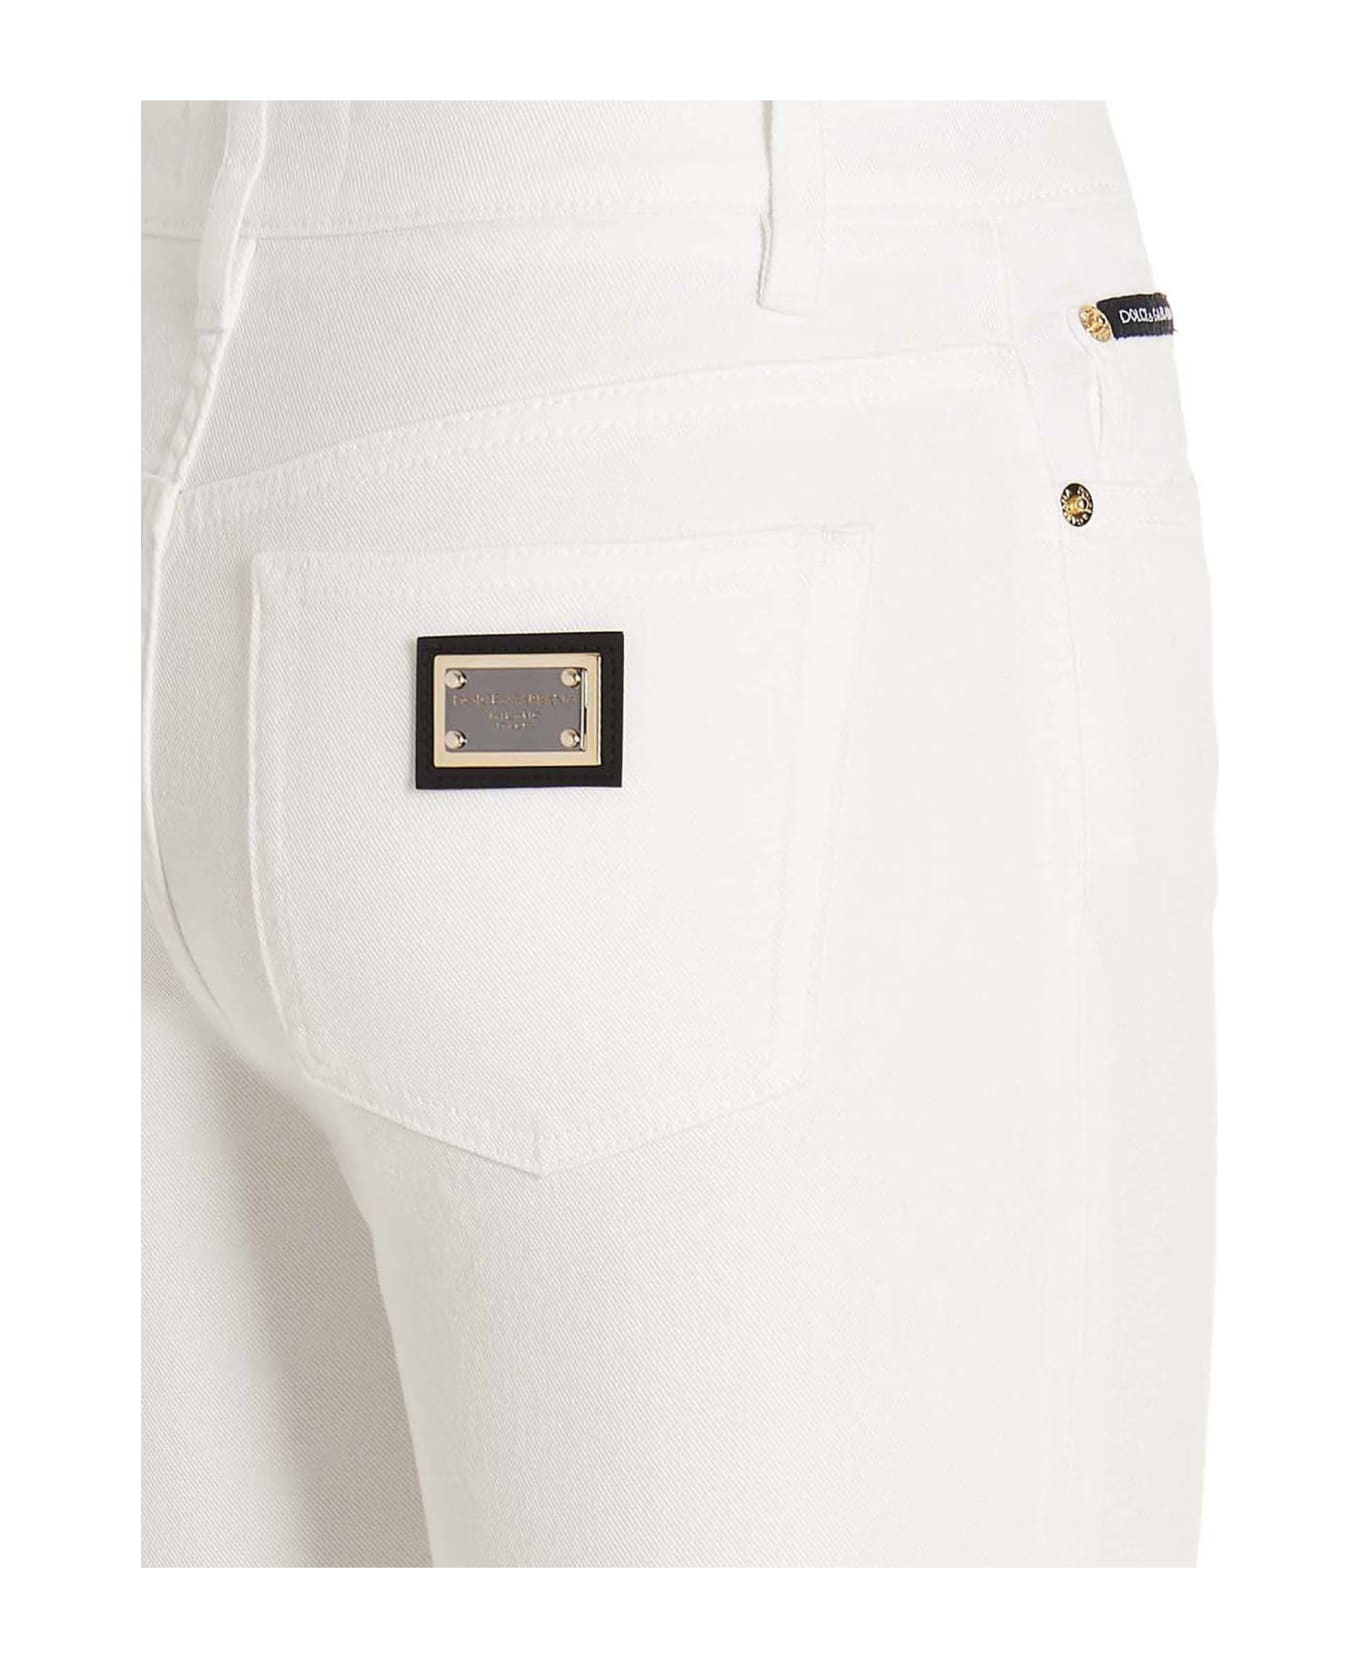 Dolce & Gabbana 5-pocket Jeans - White